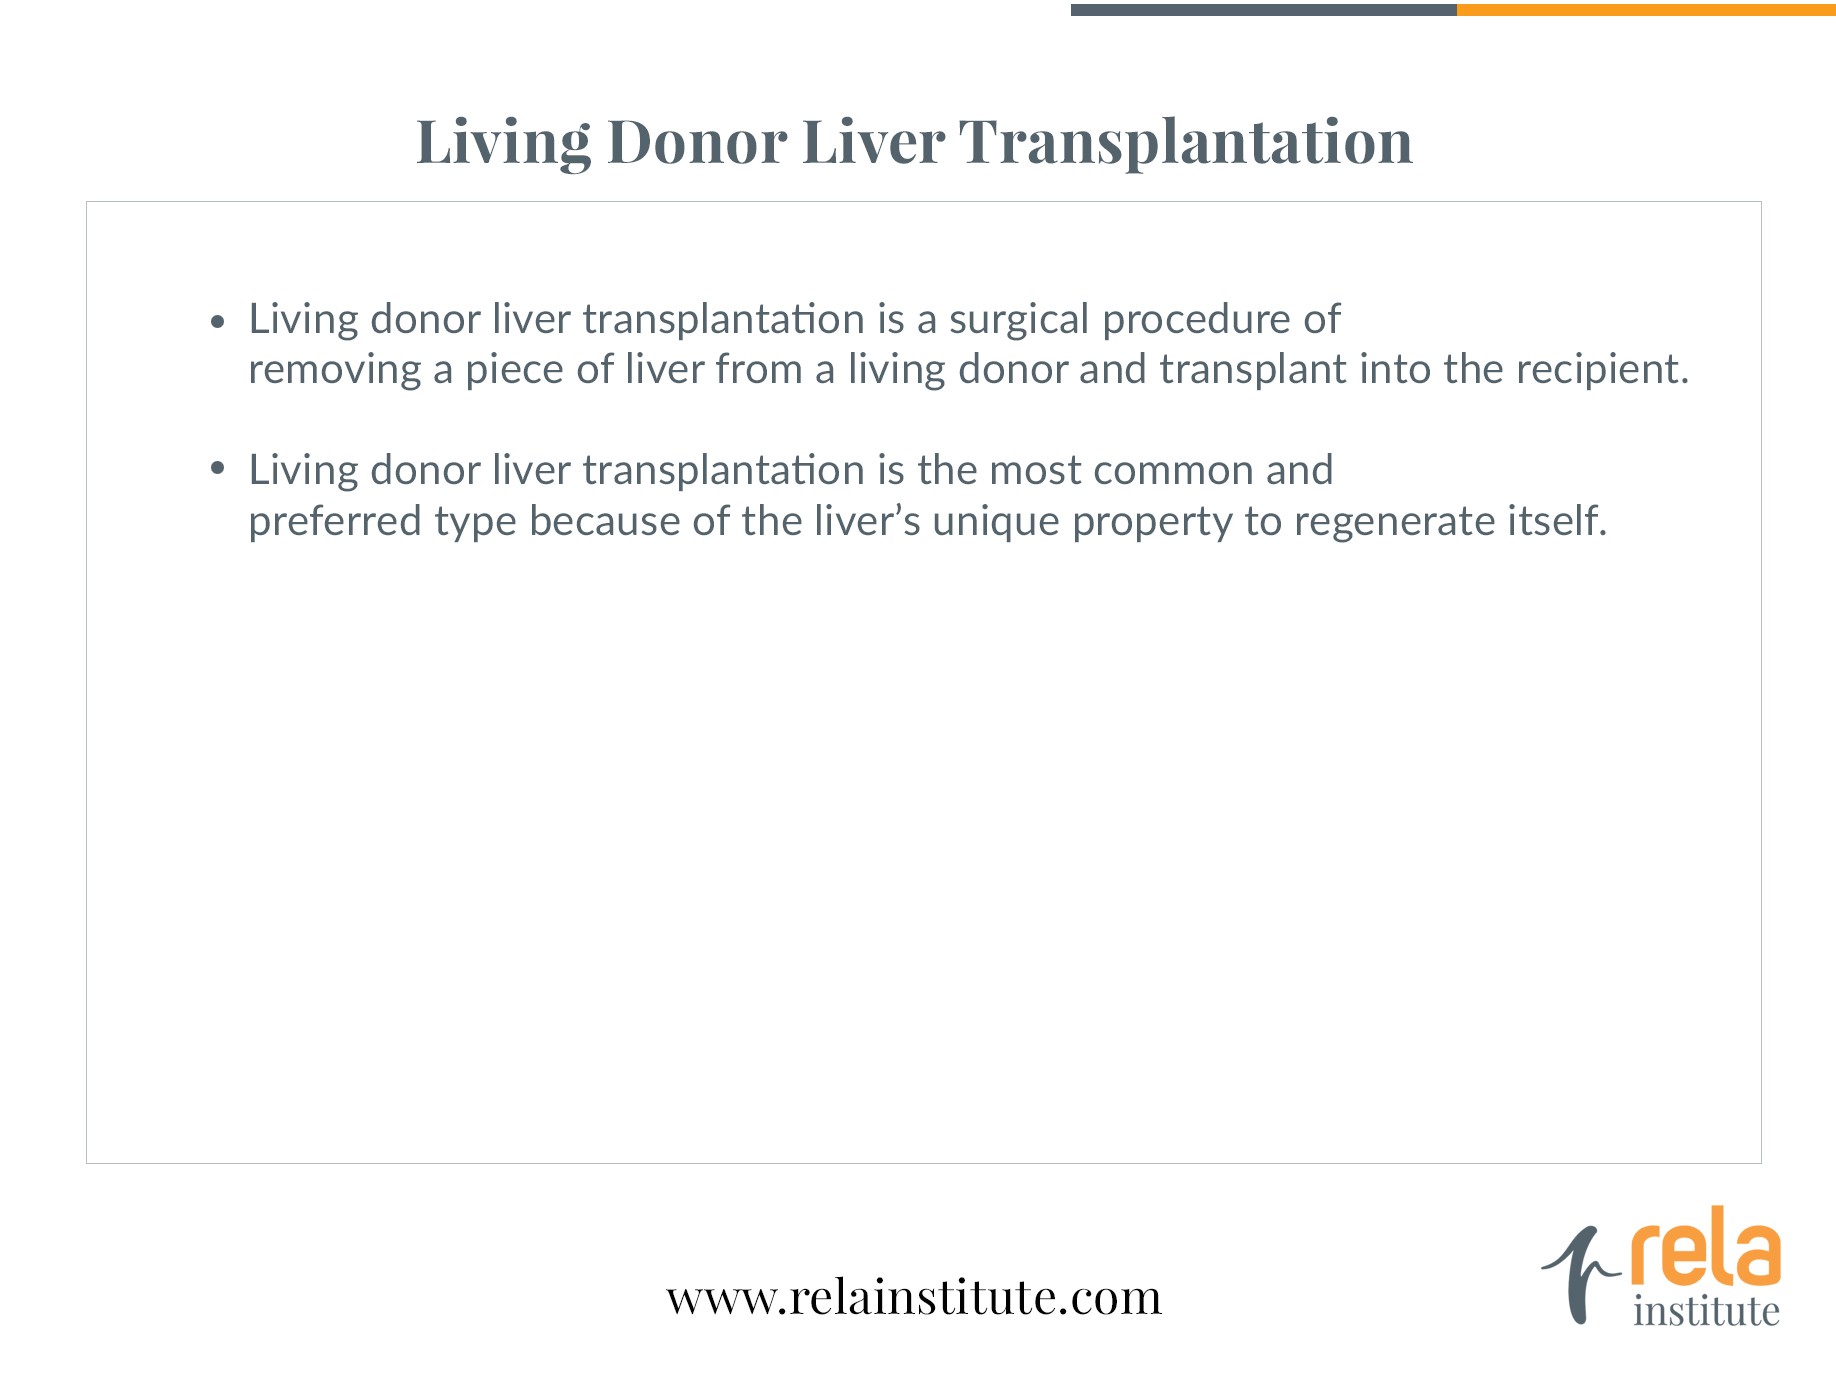 Living Donor Liver Transplant